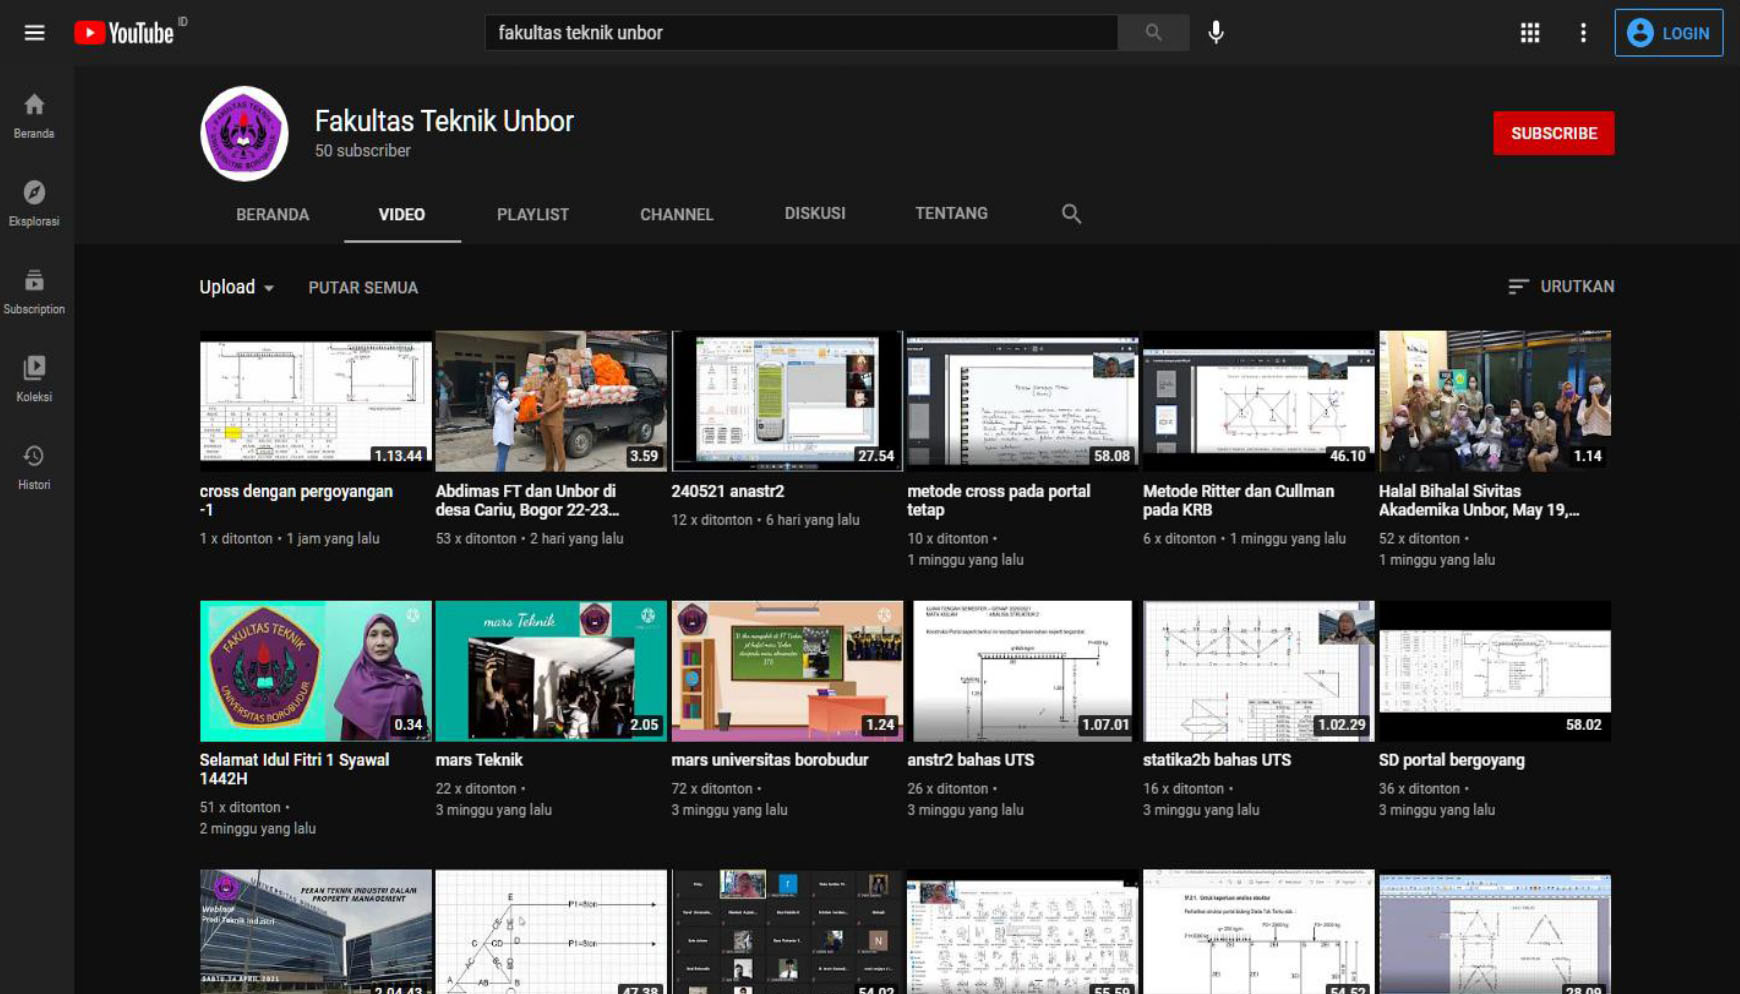 Yuk Subscribe Youtube Fakultas Teknik Universitas Borobudur